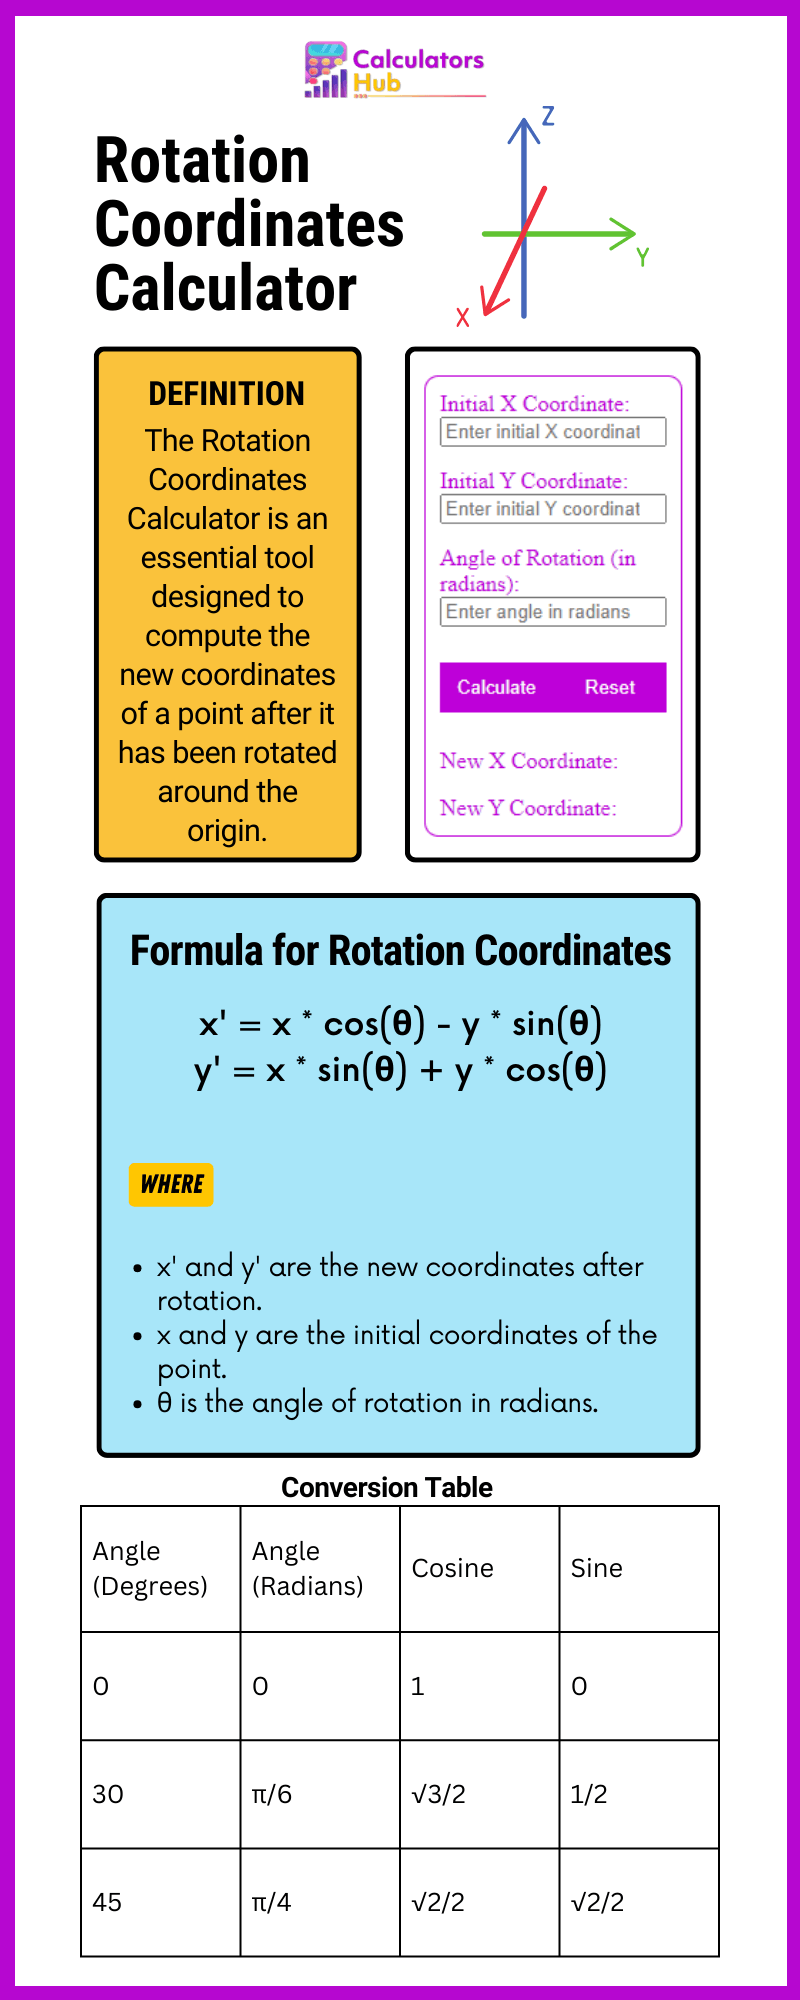 Rotation Coordinates Calculator